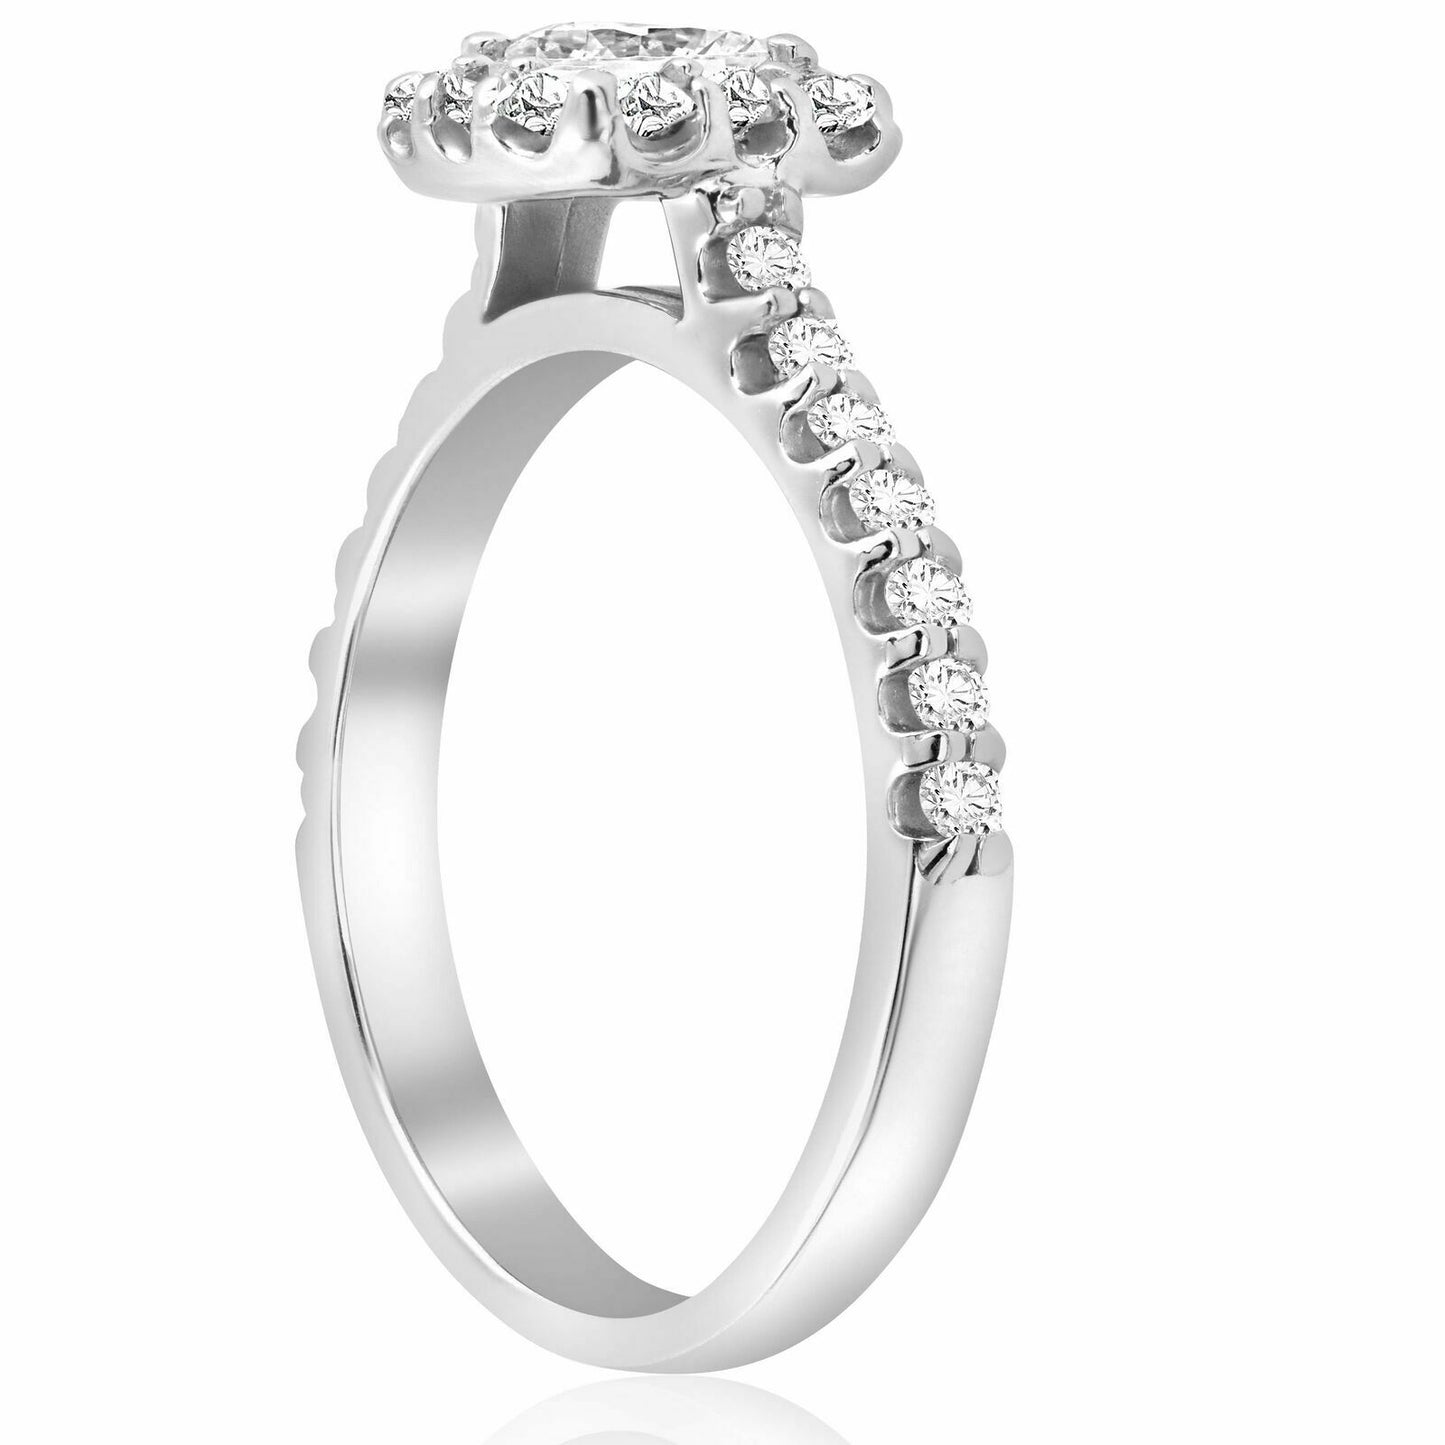 Princess Cut Diamond Engagement Ring 1.10Ct Halo Band 14k White Gold